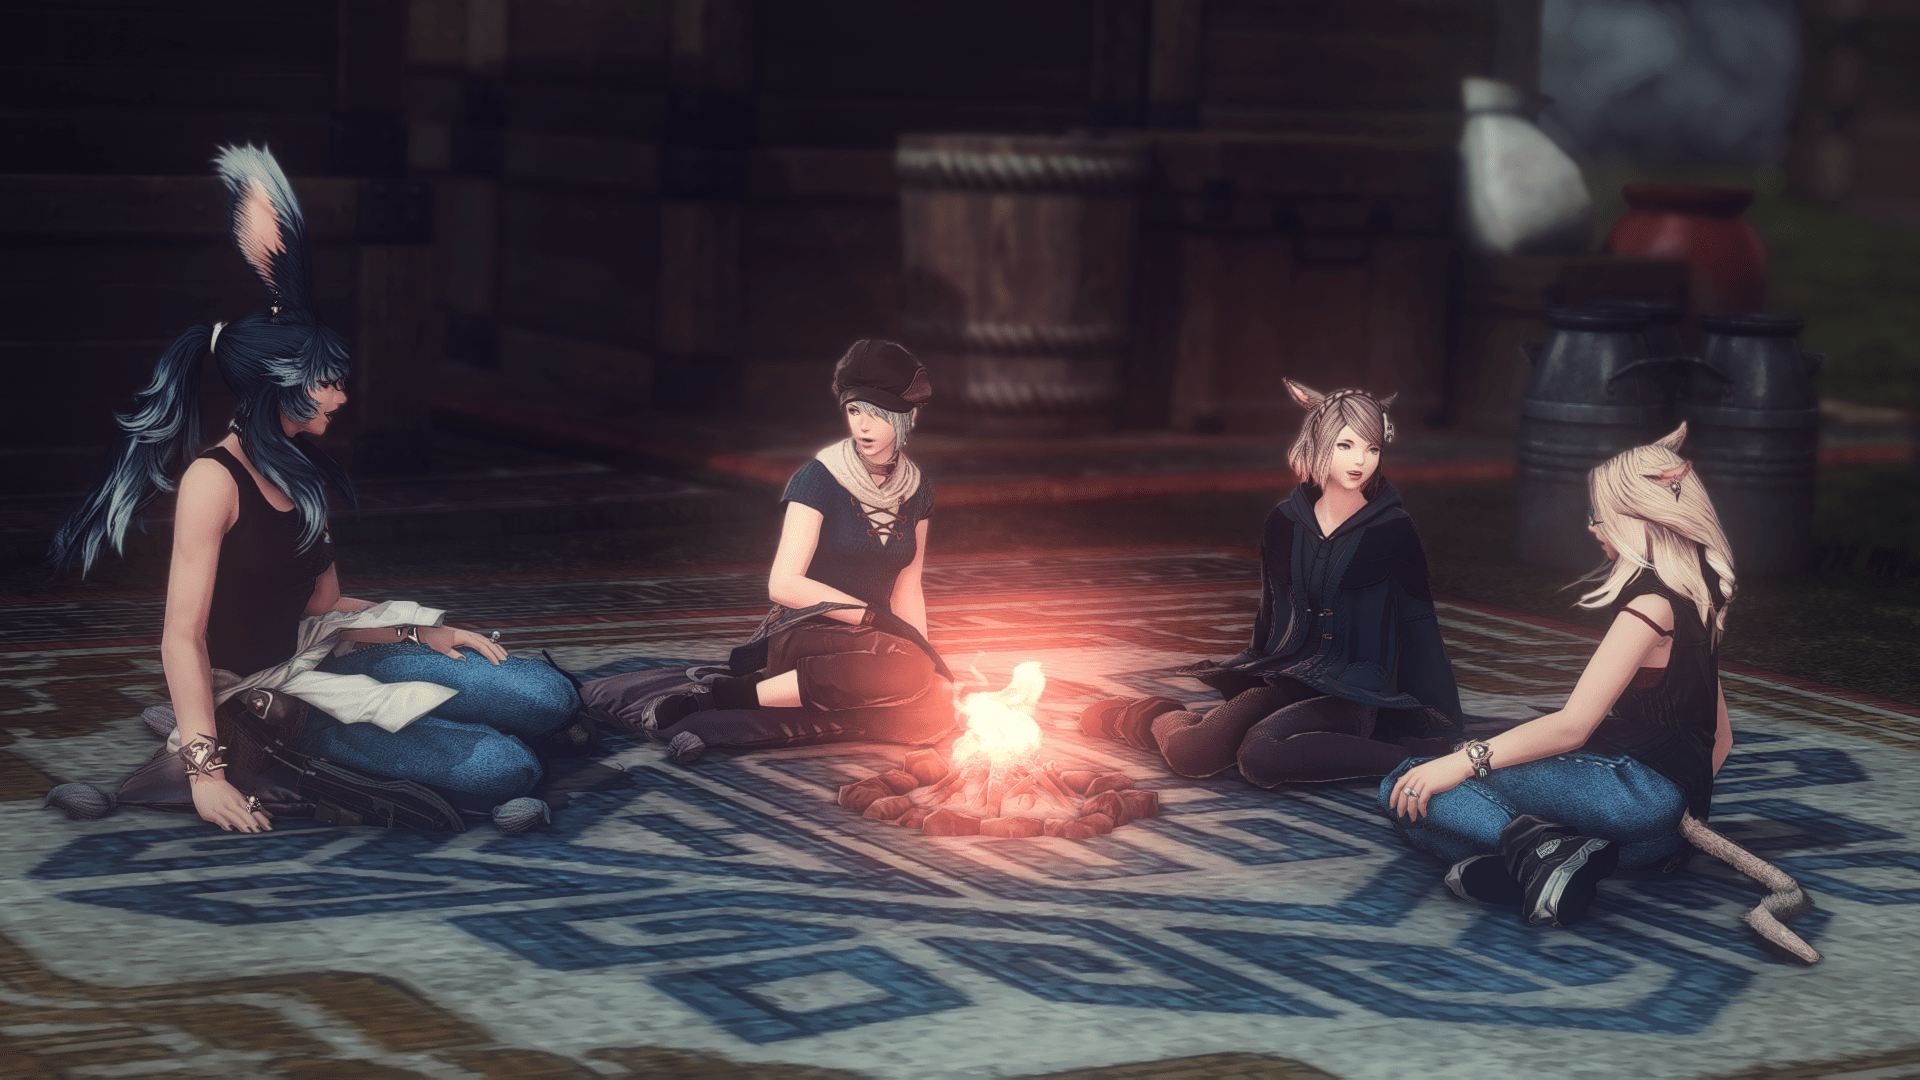 Aikirees, Azelma, Akari, and I around a campfire at night having a lovely chat.